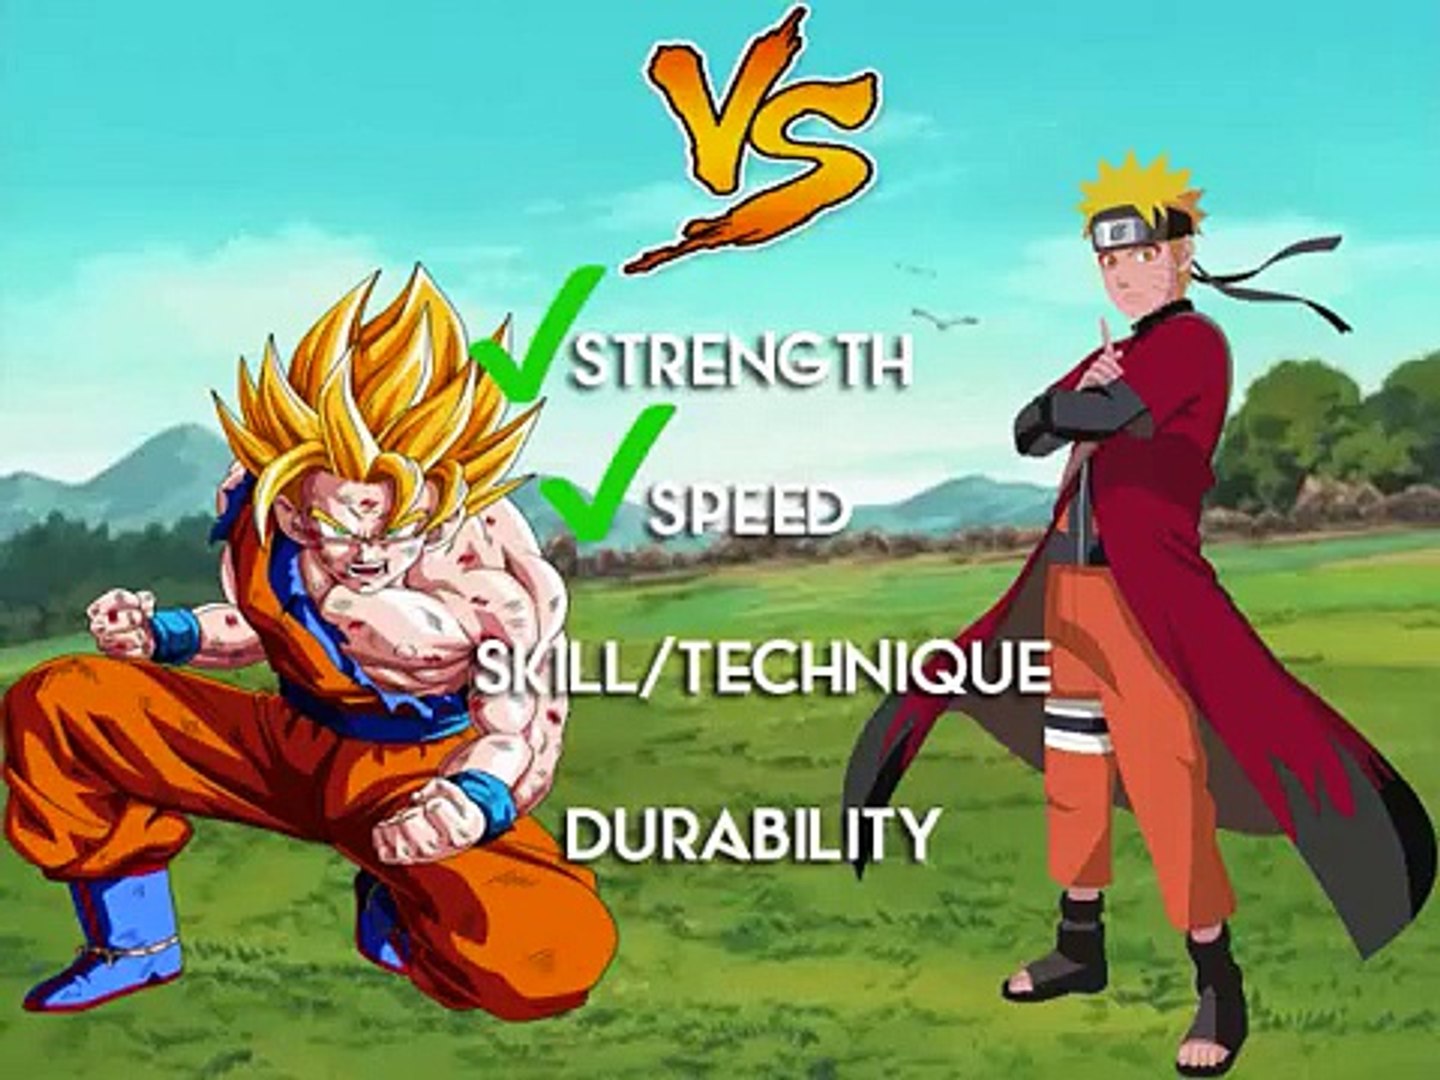 Goku vs. Naruto Who will Win Breaking it down! - Dailymotion Video